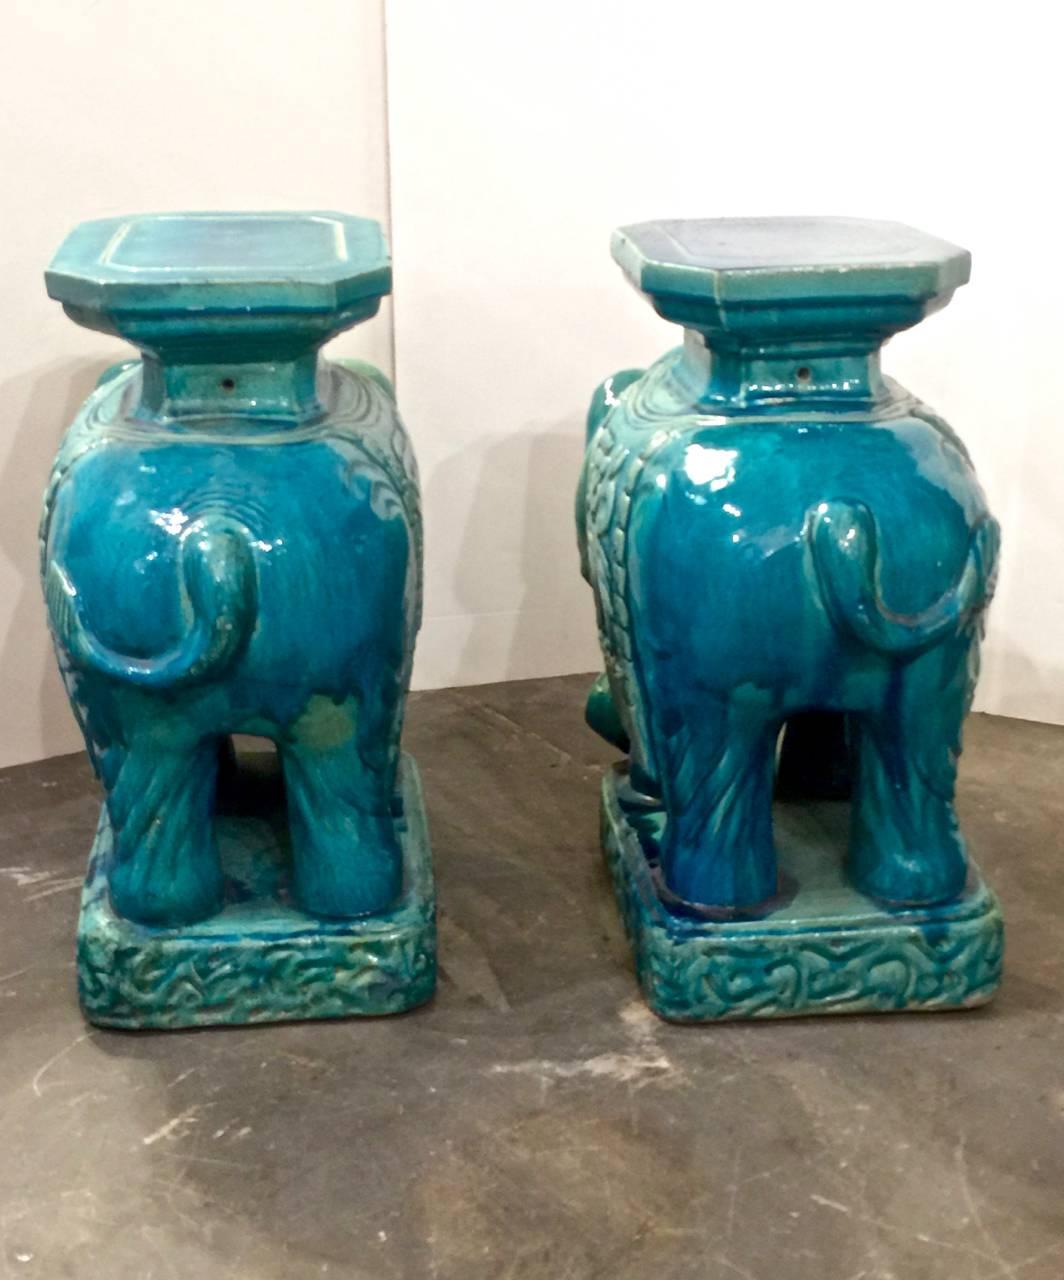 Glazed Pair of Turquoise Elephant Garden Seats, circa 1960s